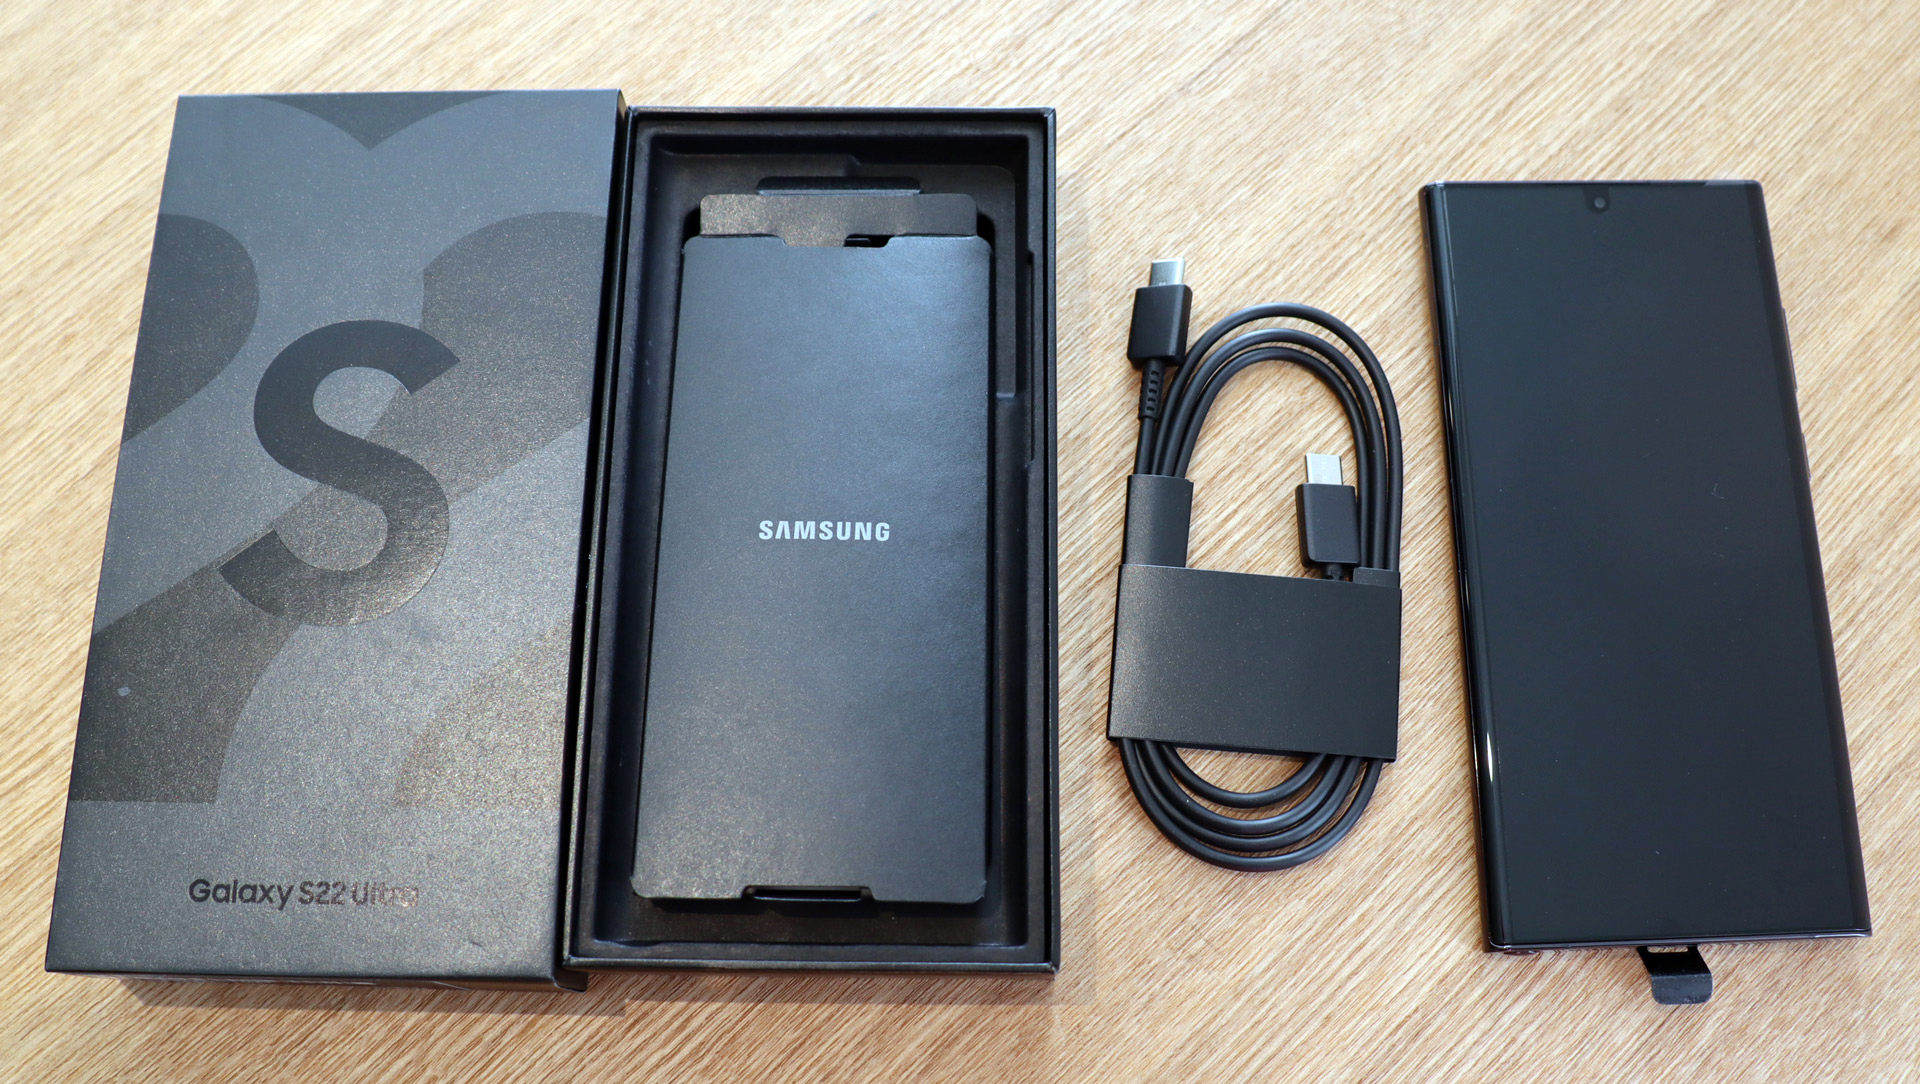 Samsung Galaxy S22 Ultra inside the box